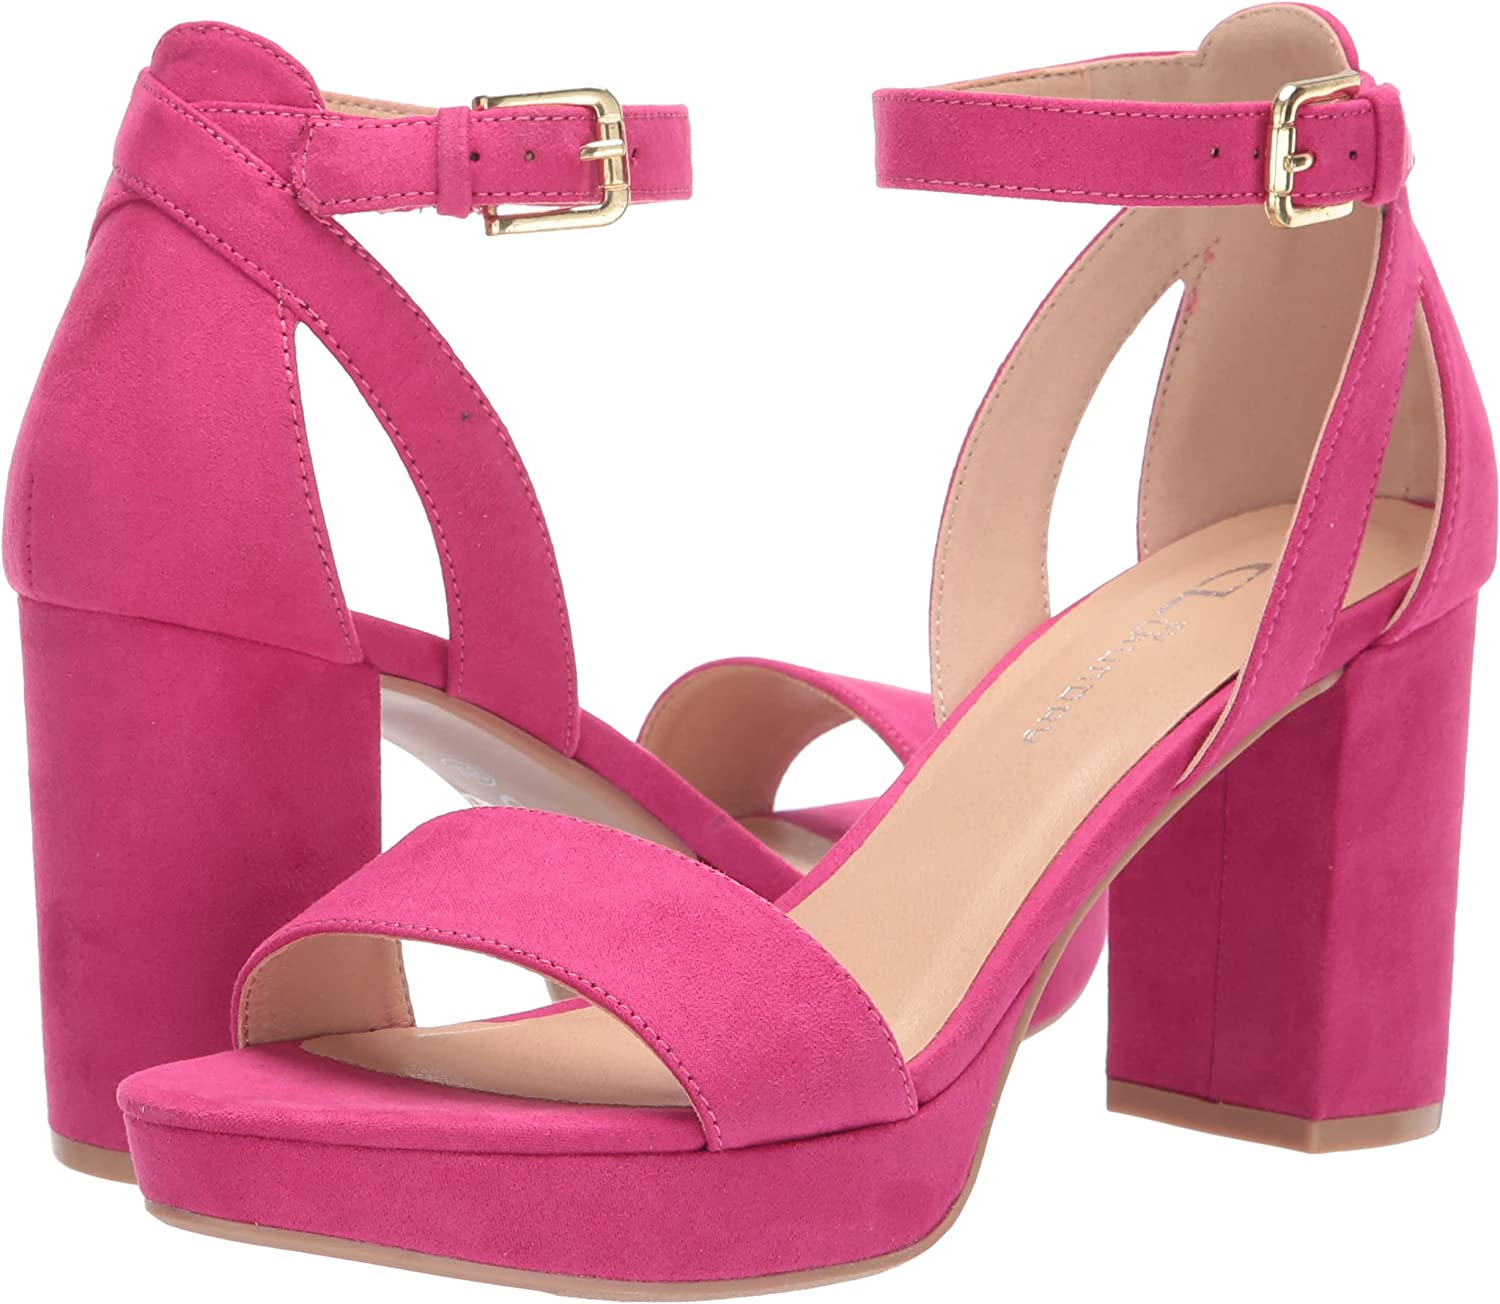 Go On Block Heel Sandal - Hot Pink - Brazos Avenue Market 